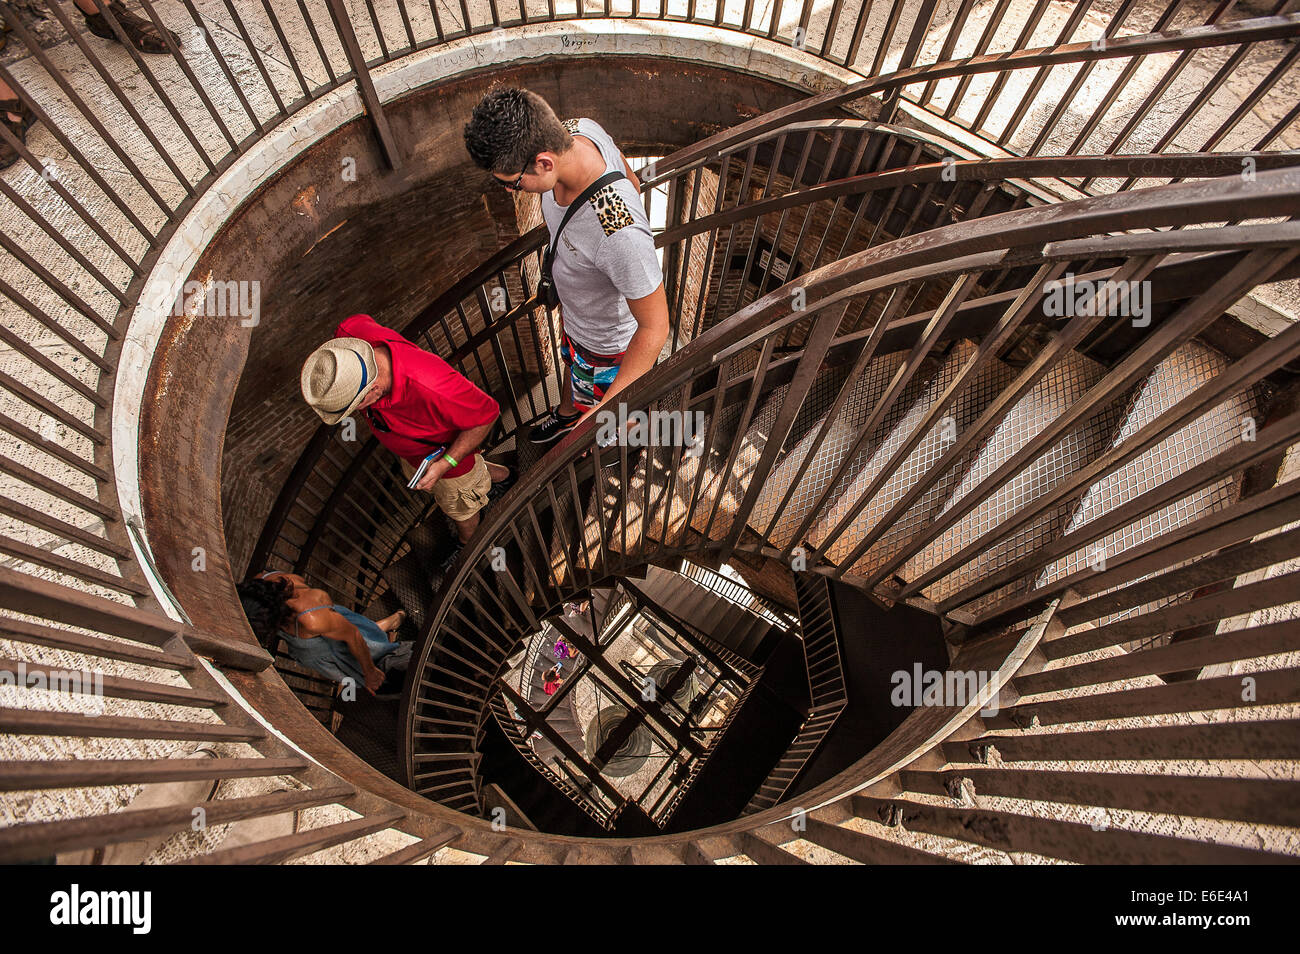 Italia Veneto Verona Lamberti Torre escalera de caracol interior Foto de stock